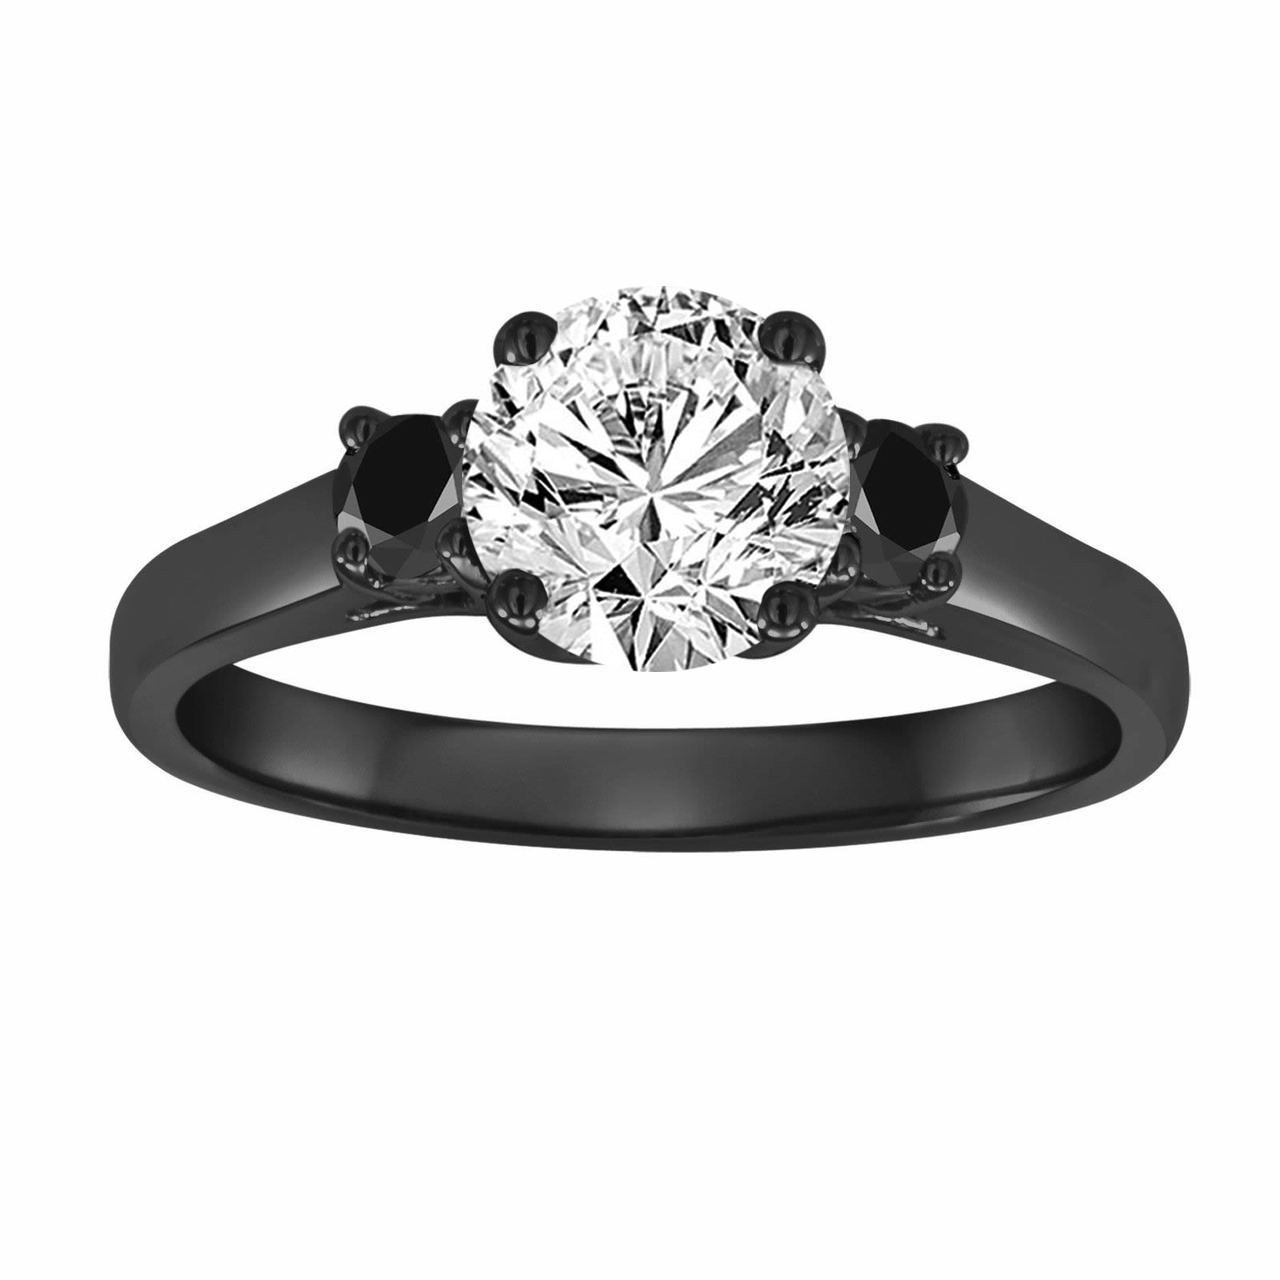 Mens Black Diamond Wedding Ring | LOVE2HAVE in the UK!